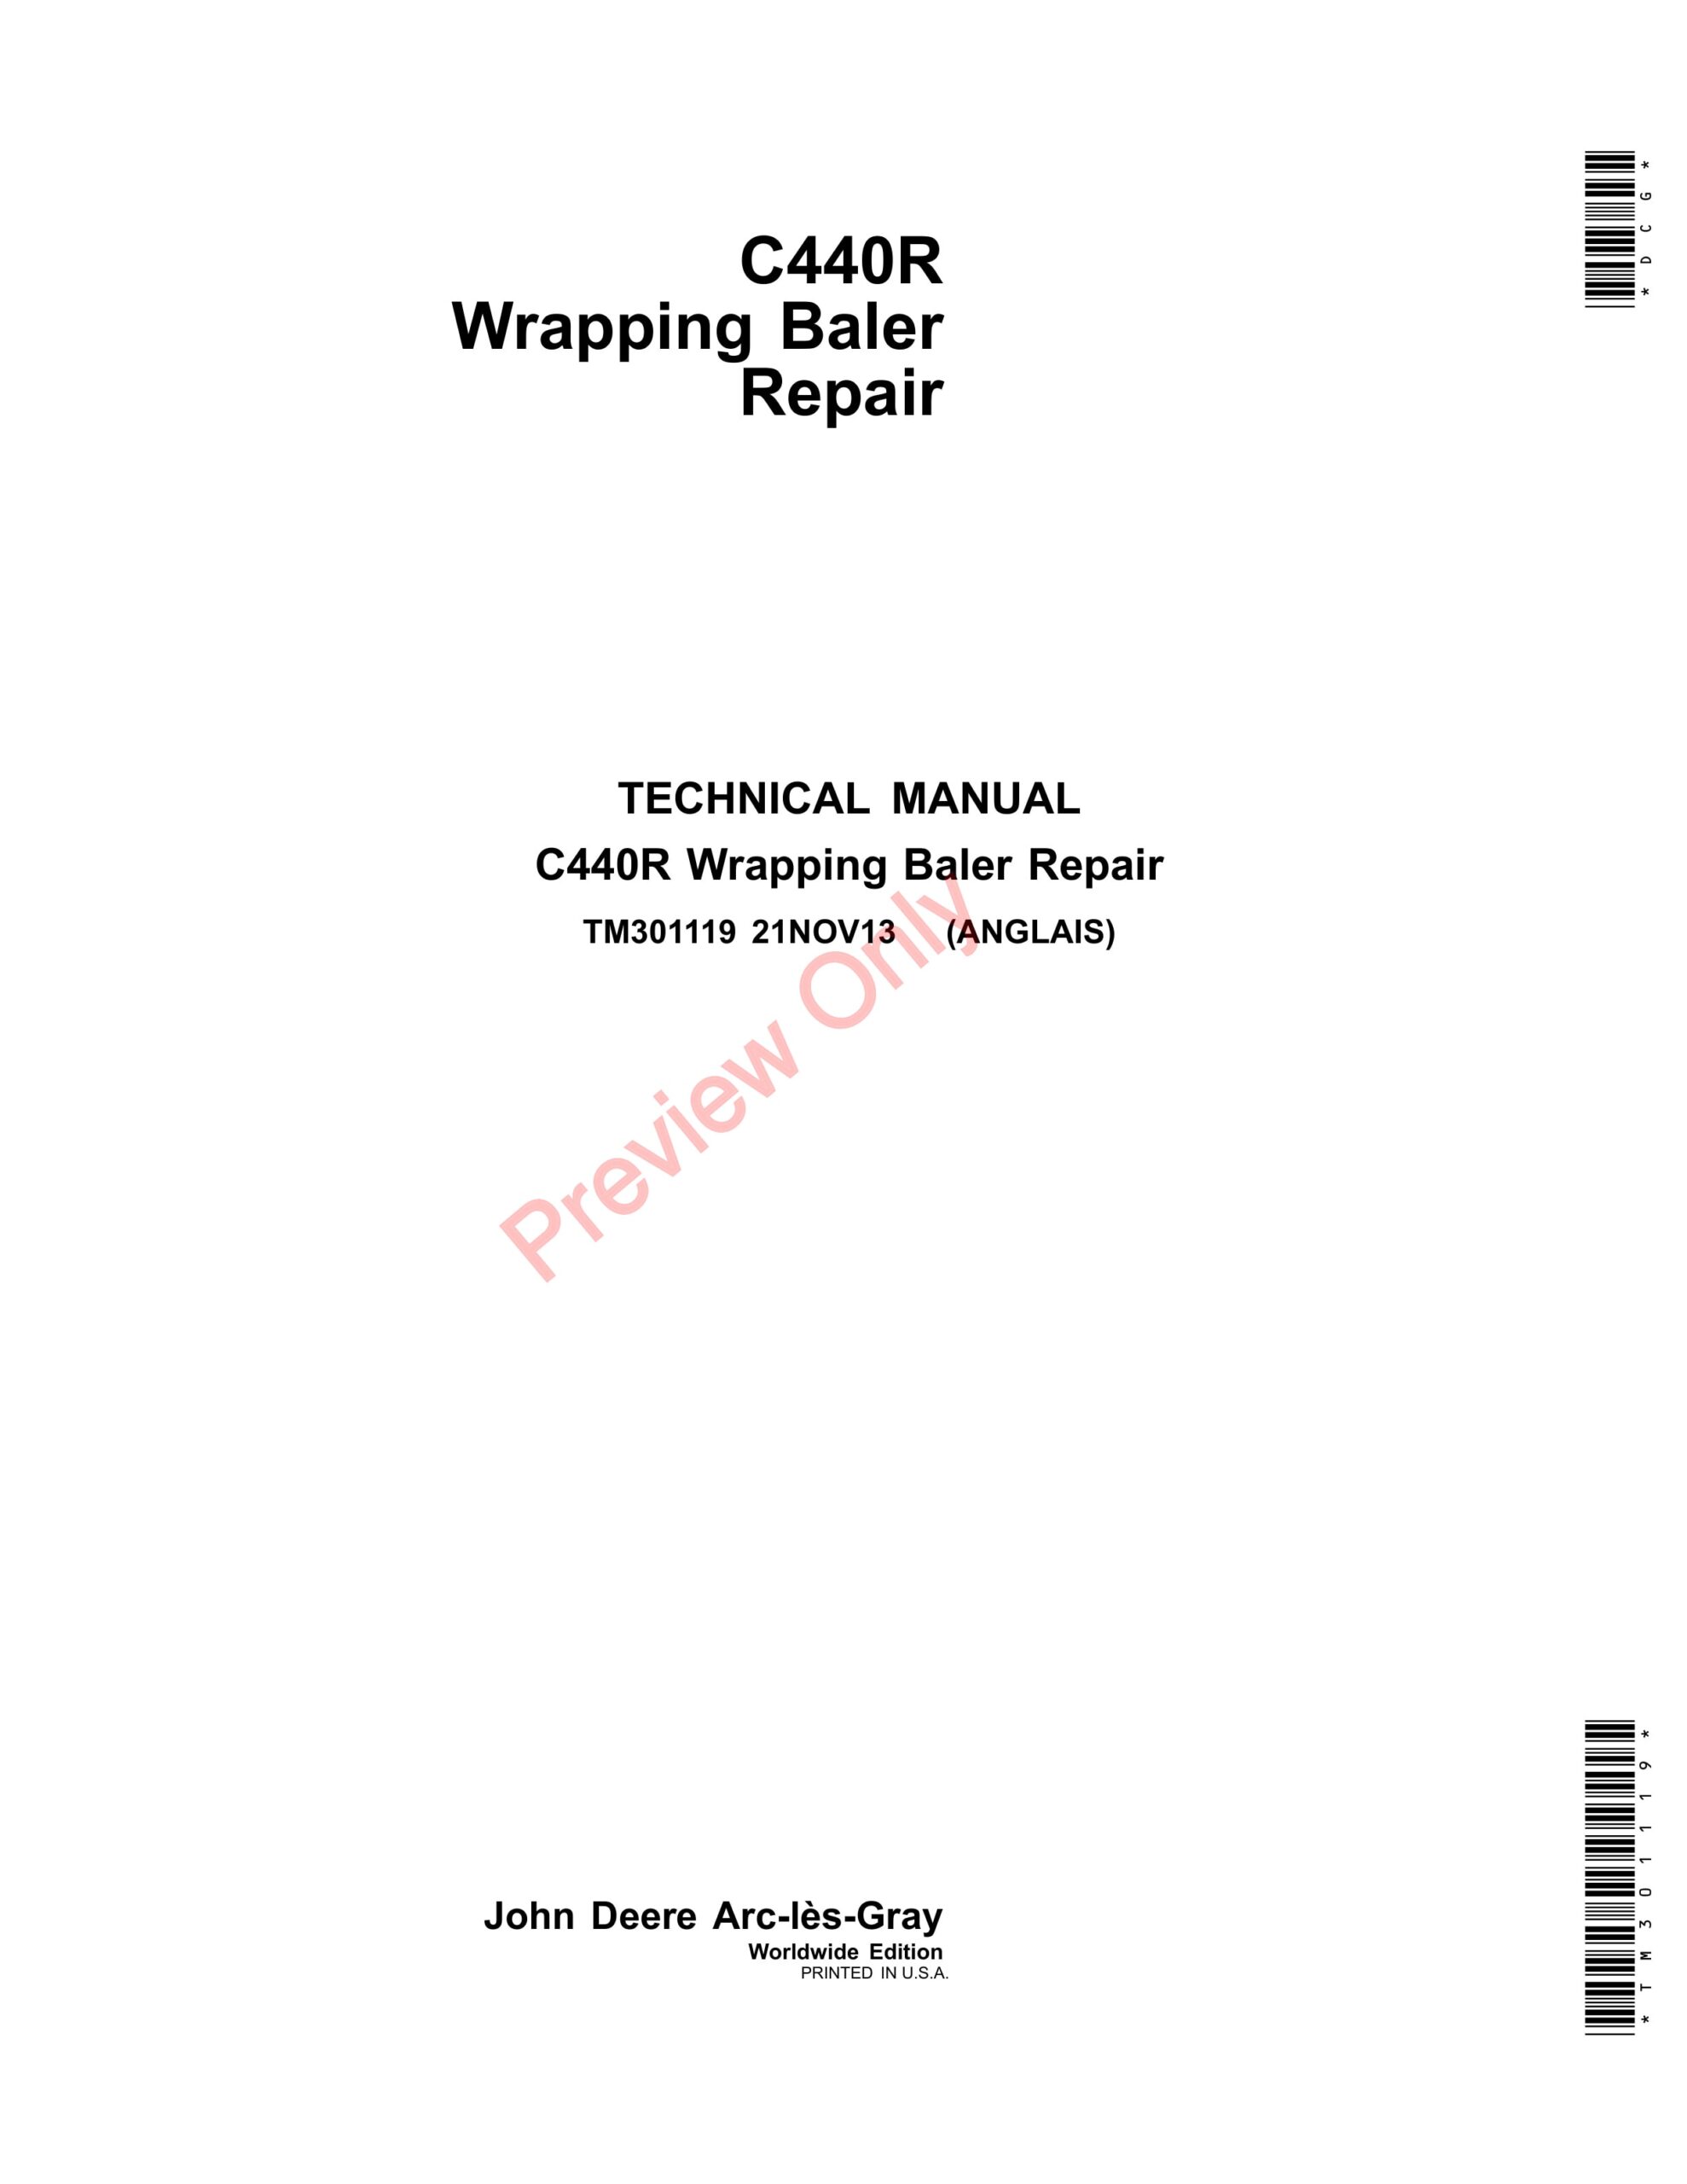 John Deere C440R Wrapping Baler Technical Manual TM301119 21NOV13-1